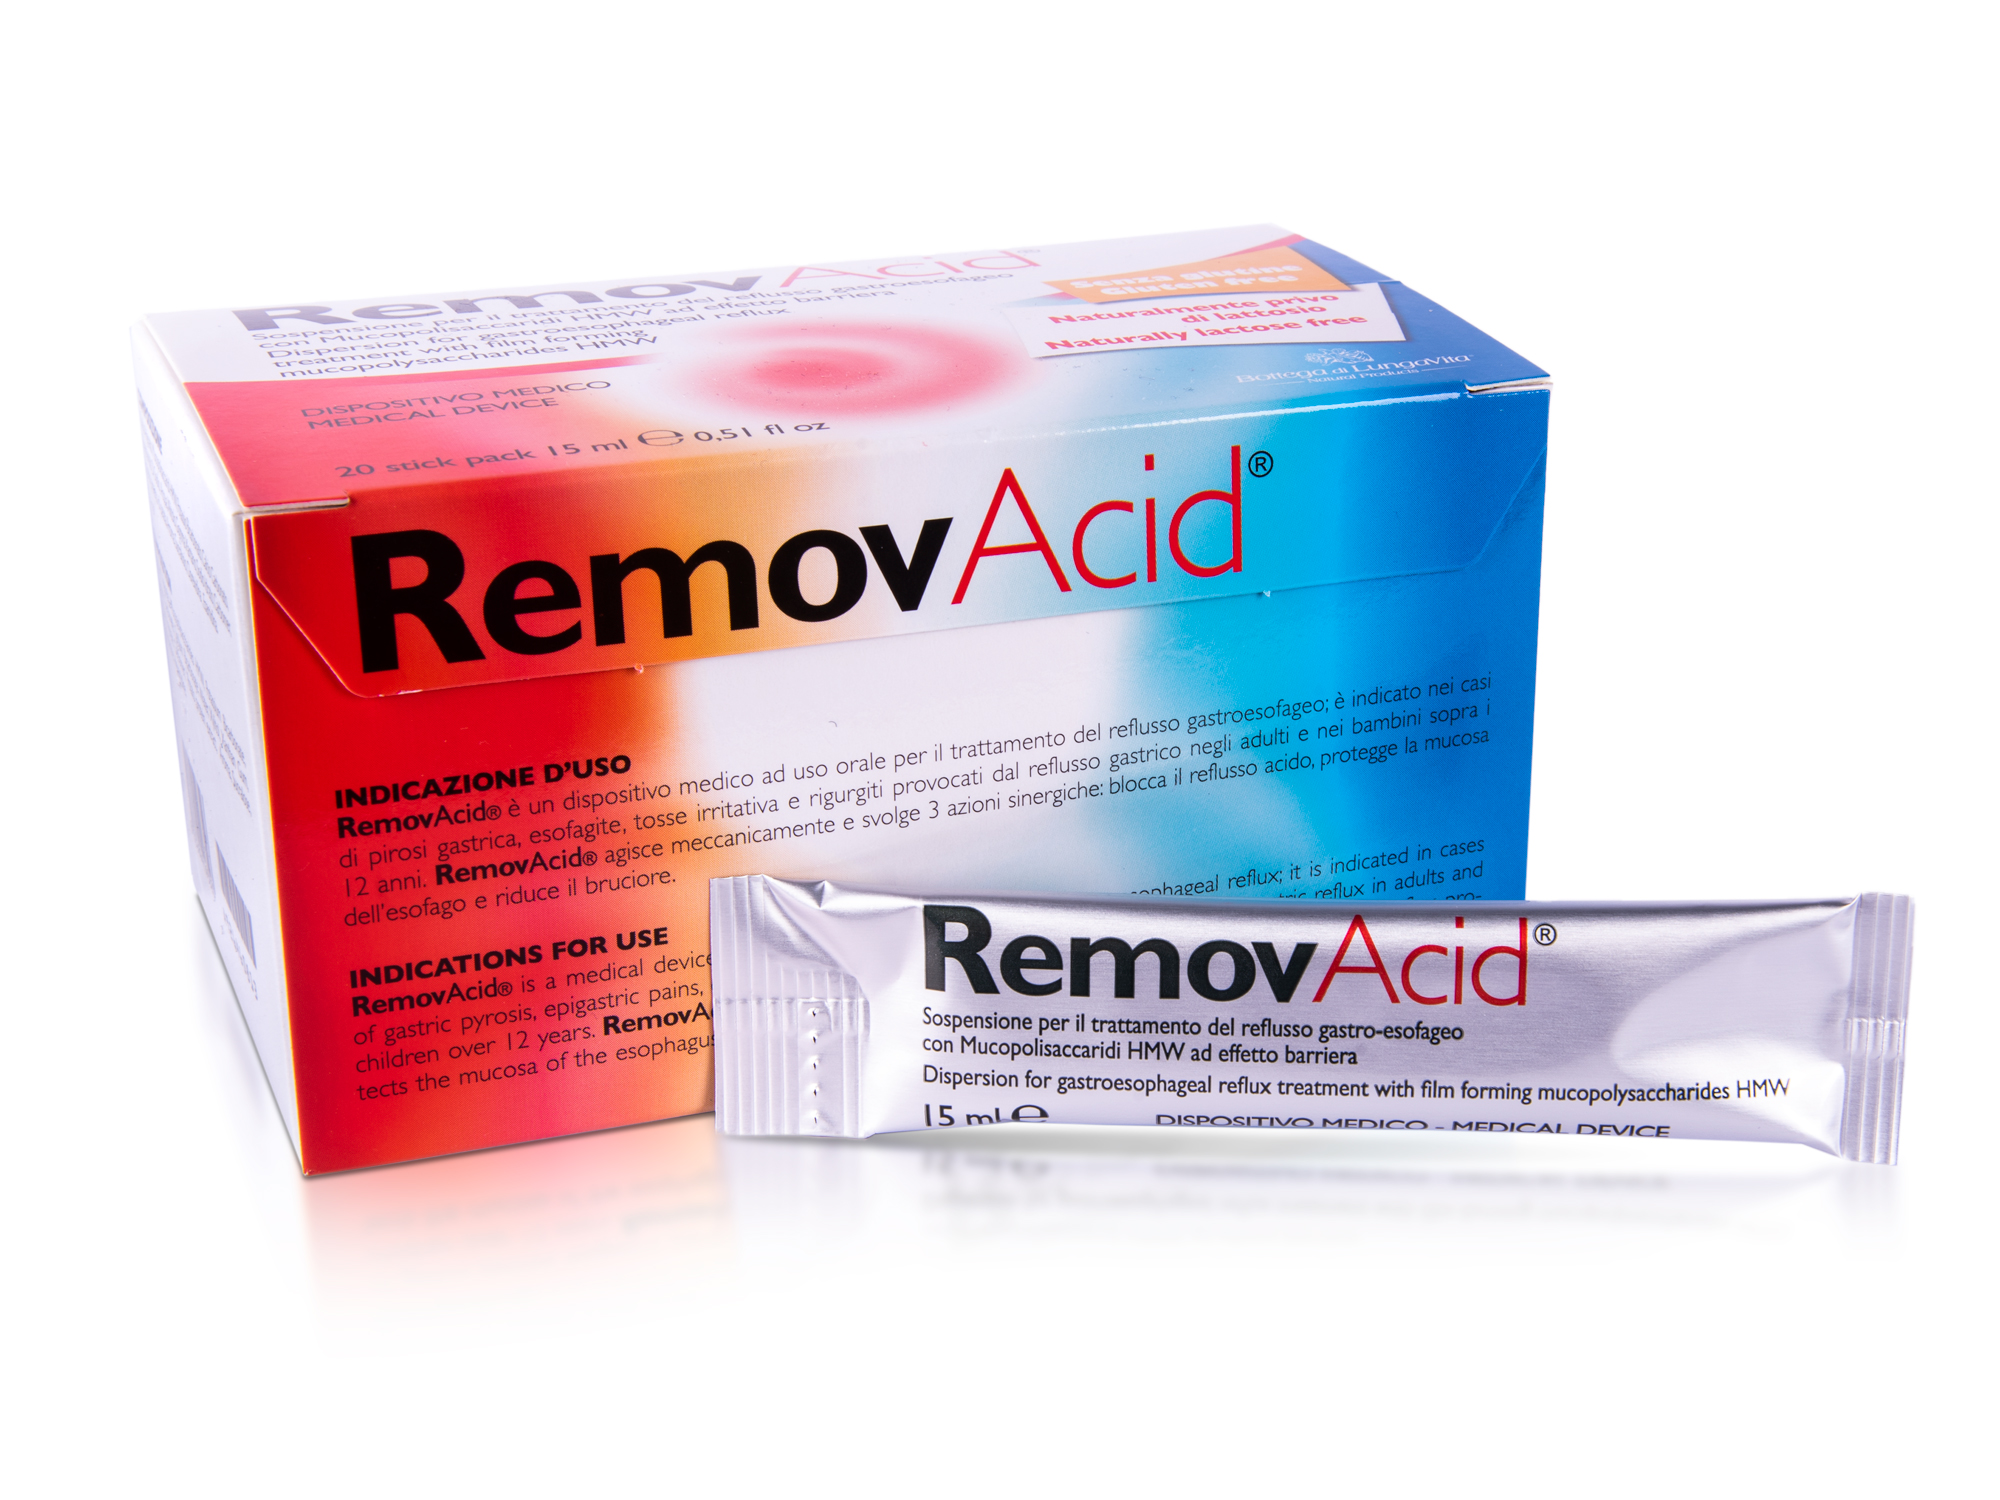 REMOV ACID - MEDICAL DEVICE FOR GASTRIC REFLUX